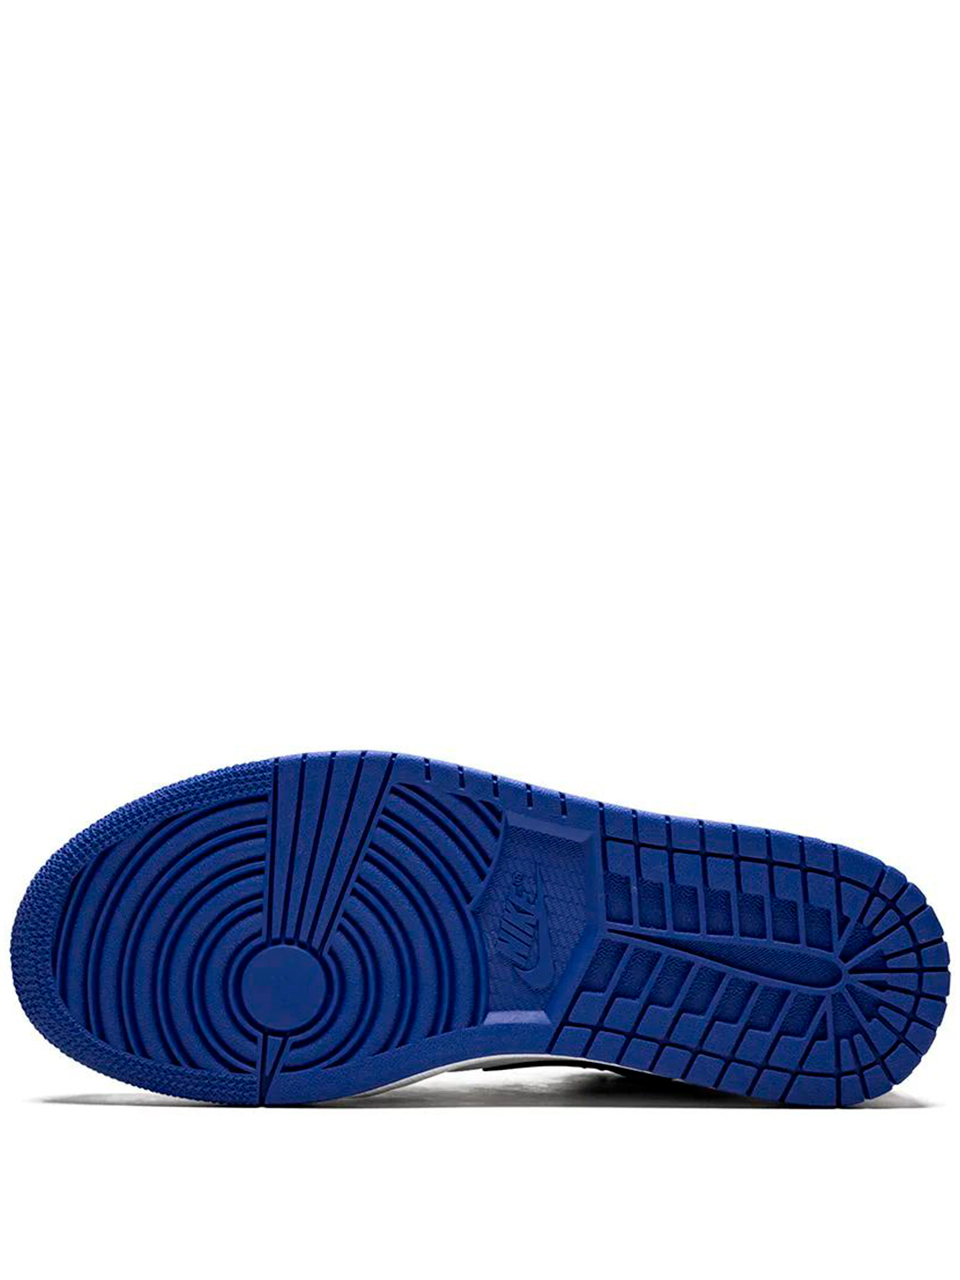 Imagem de: Tênis Nike Air Jordan 1 Low Azul